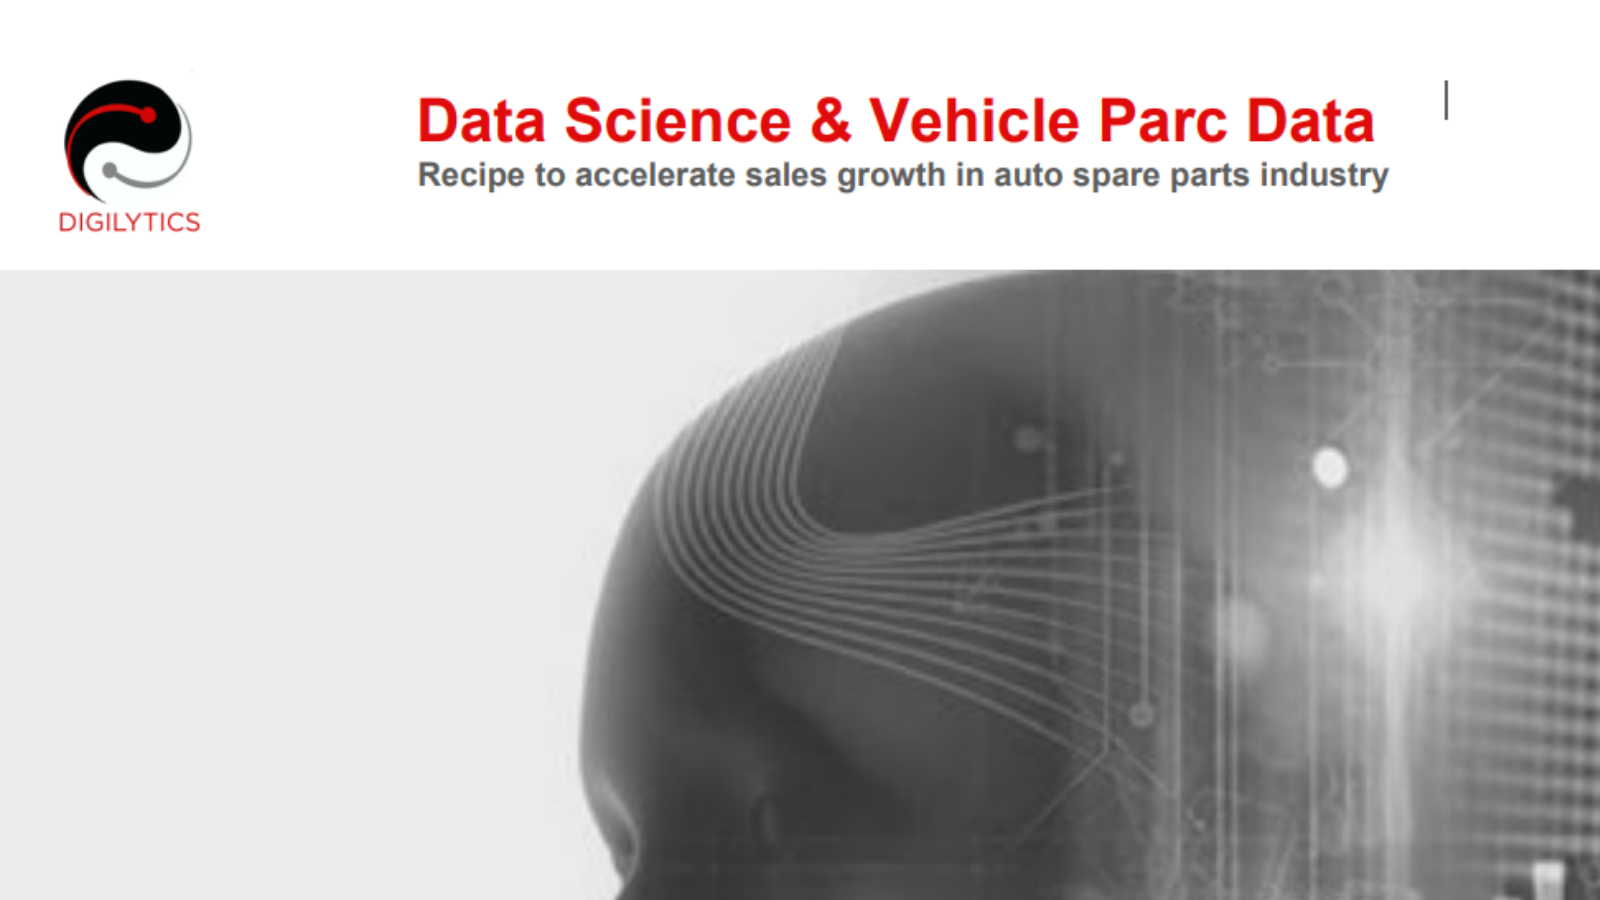 Data Science & Vehicle Parc Data